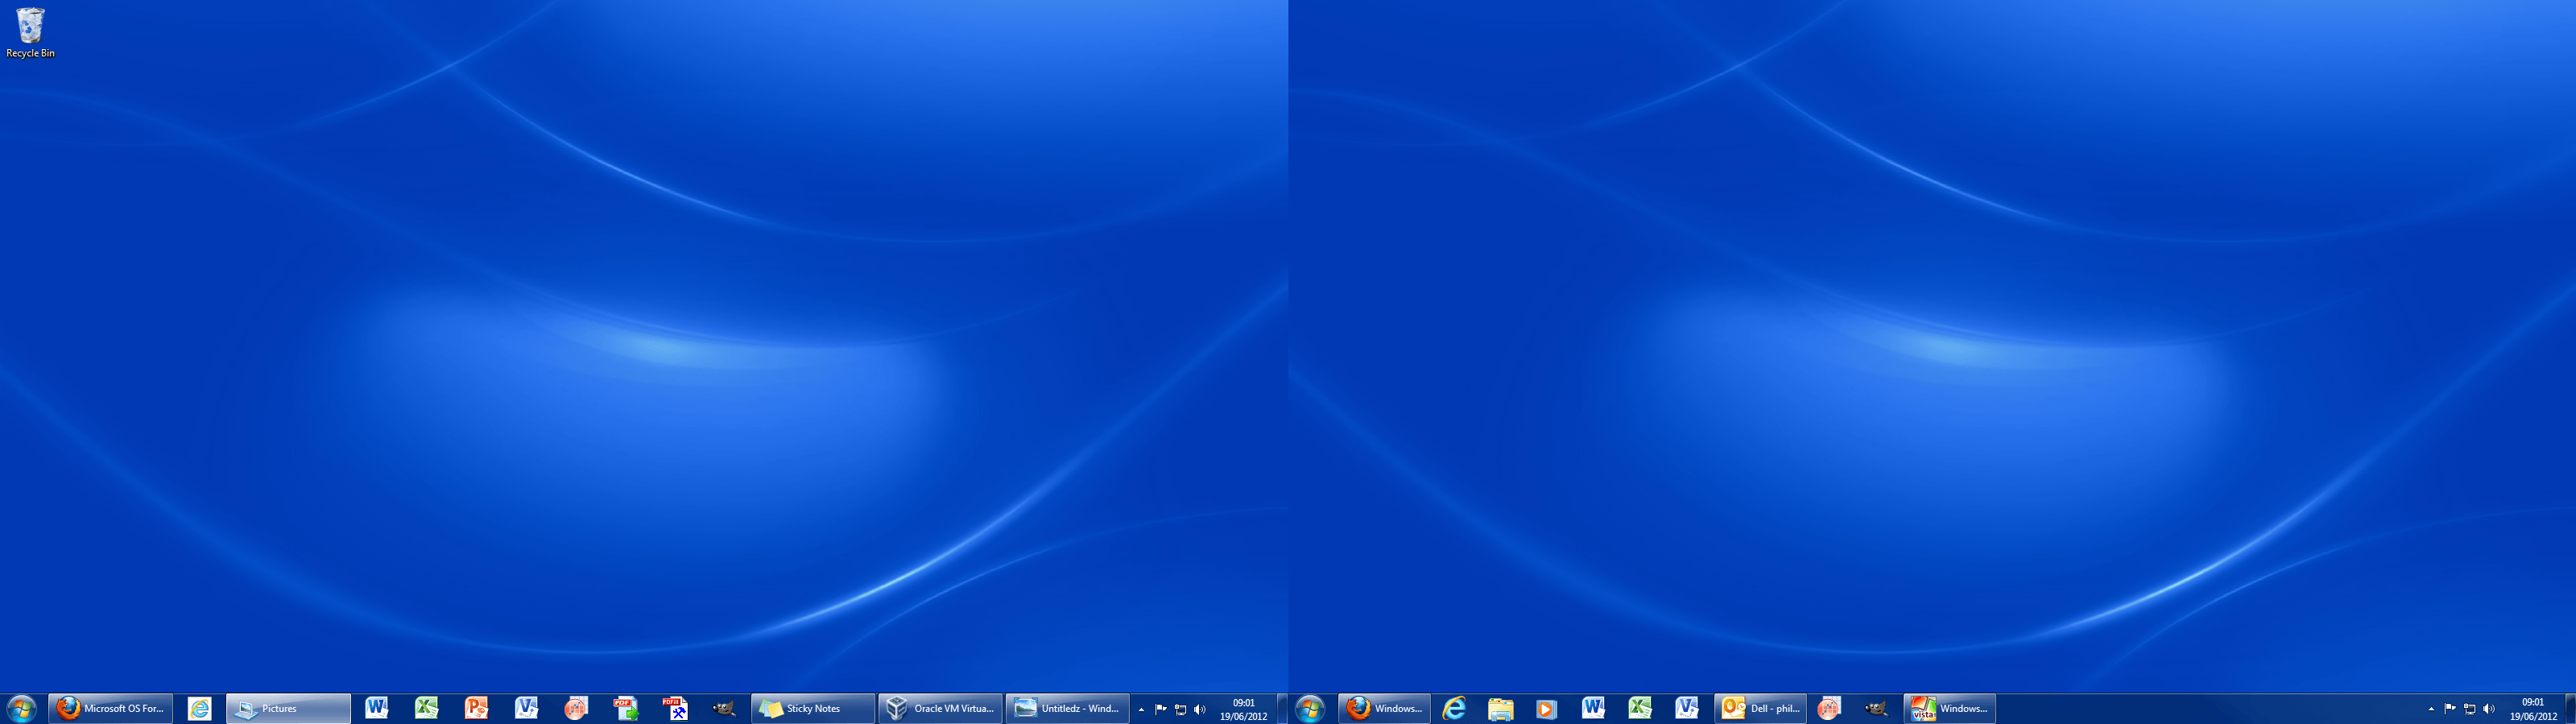 Windows 81 Default Wallpapers On Wallpaperdog